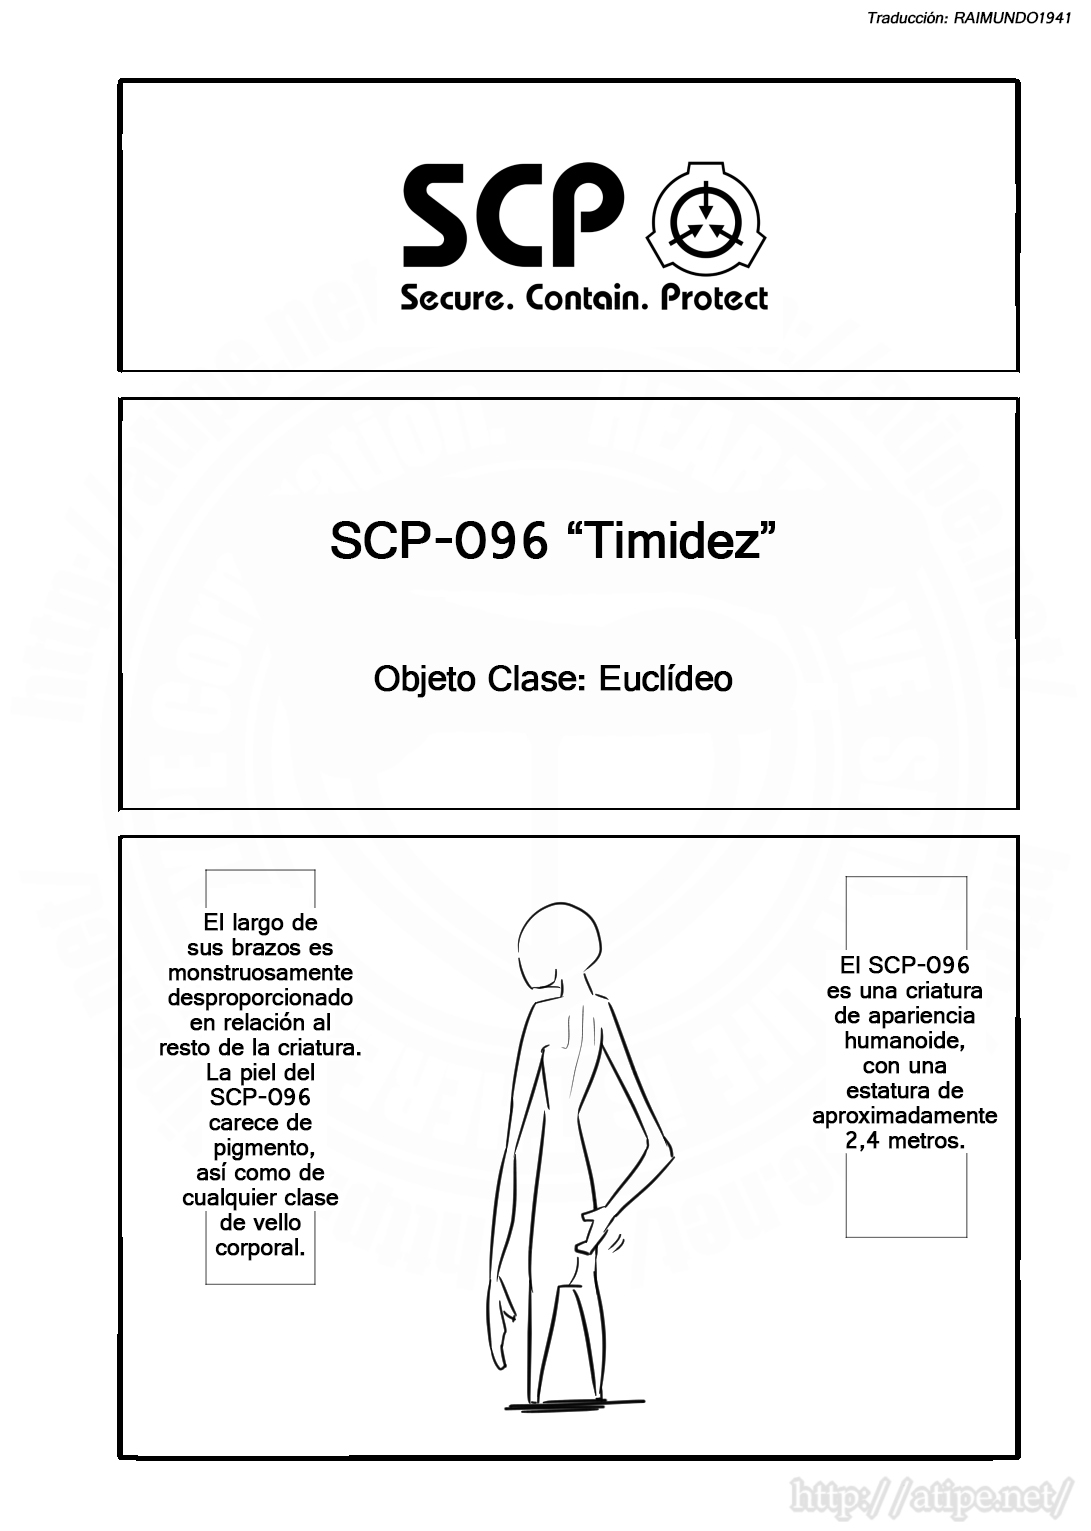 SCP OS Ch.002 SCP-096 Part 02 (Spanish) by Raimundo1941 on DeviantArt